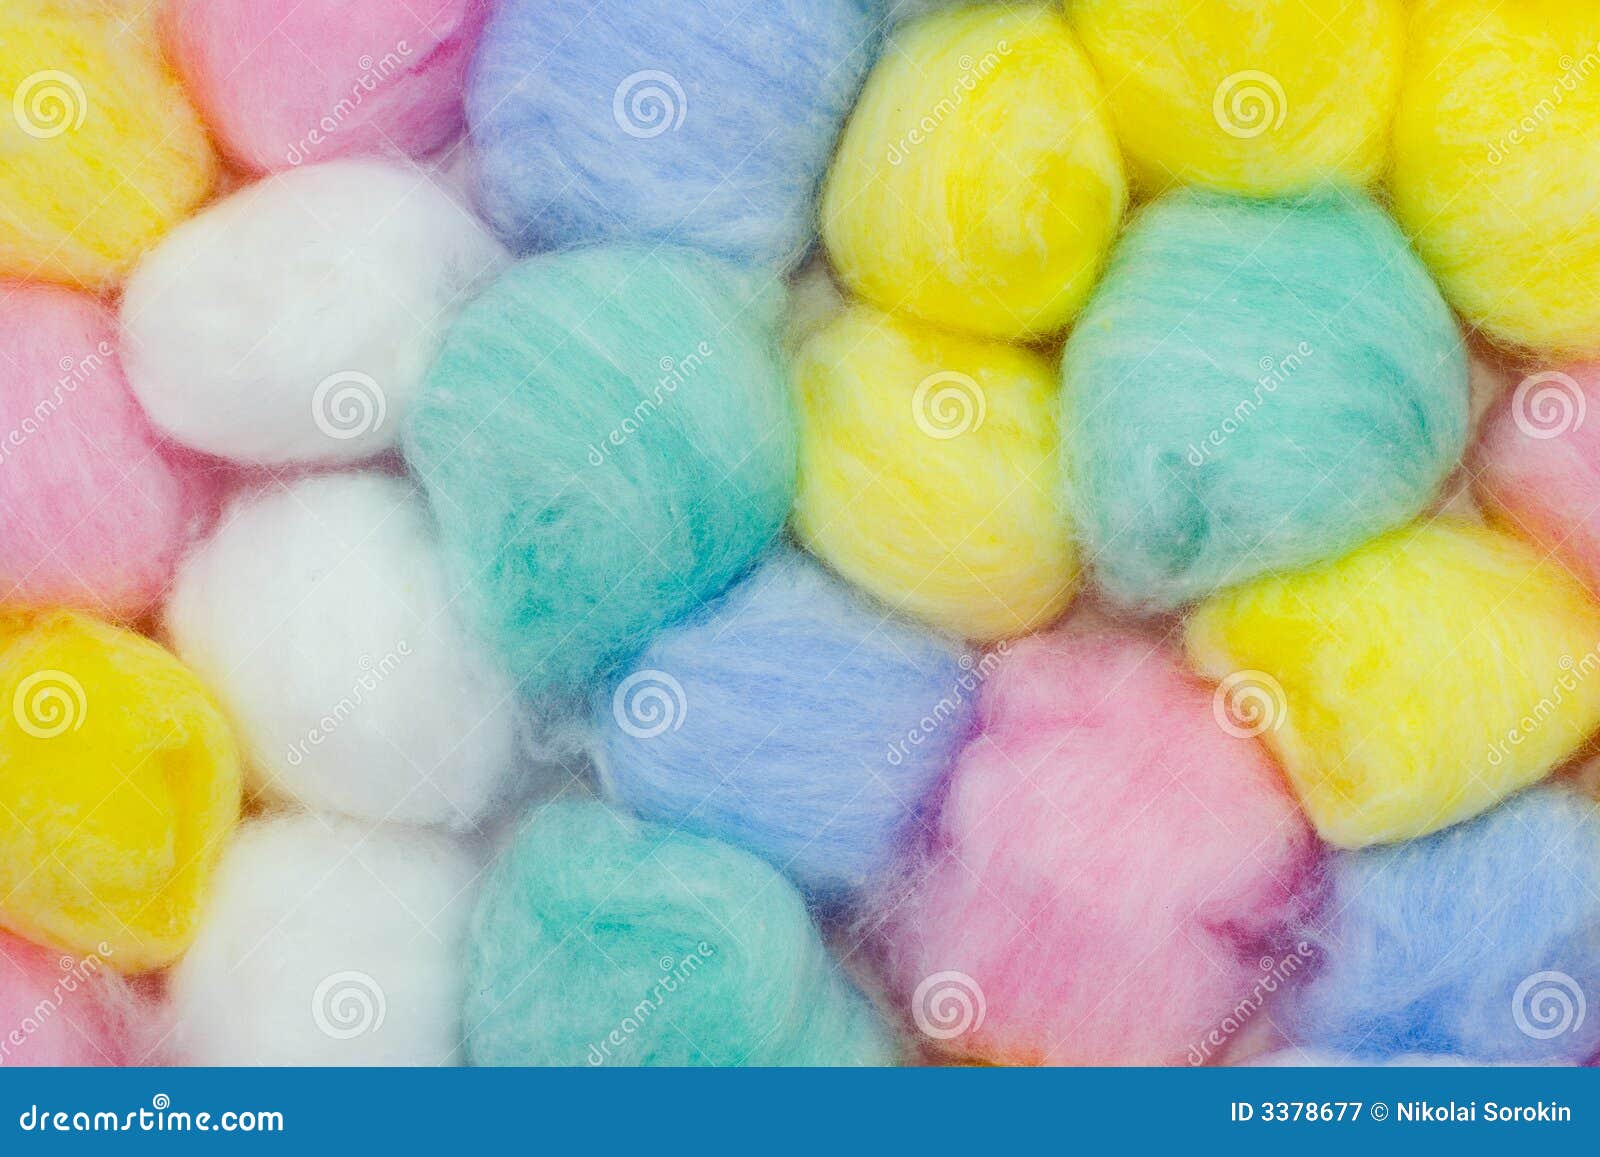 Multicolored cotton balls stock photo. Image of object - 3326504